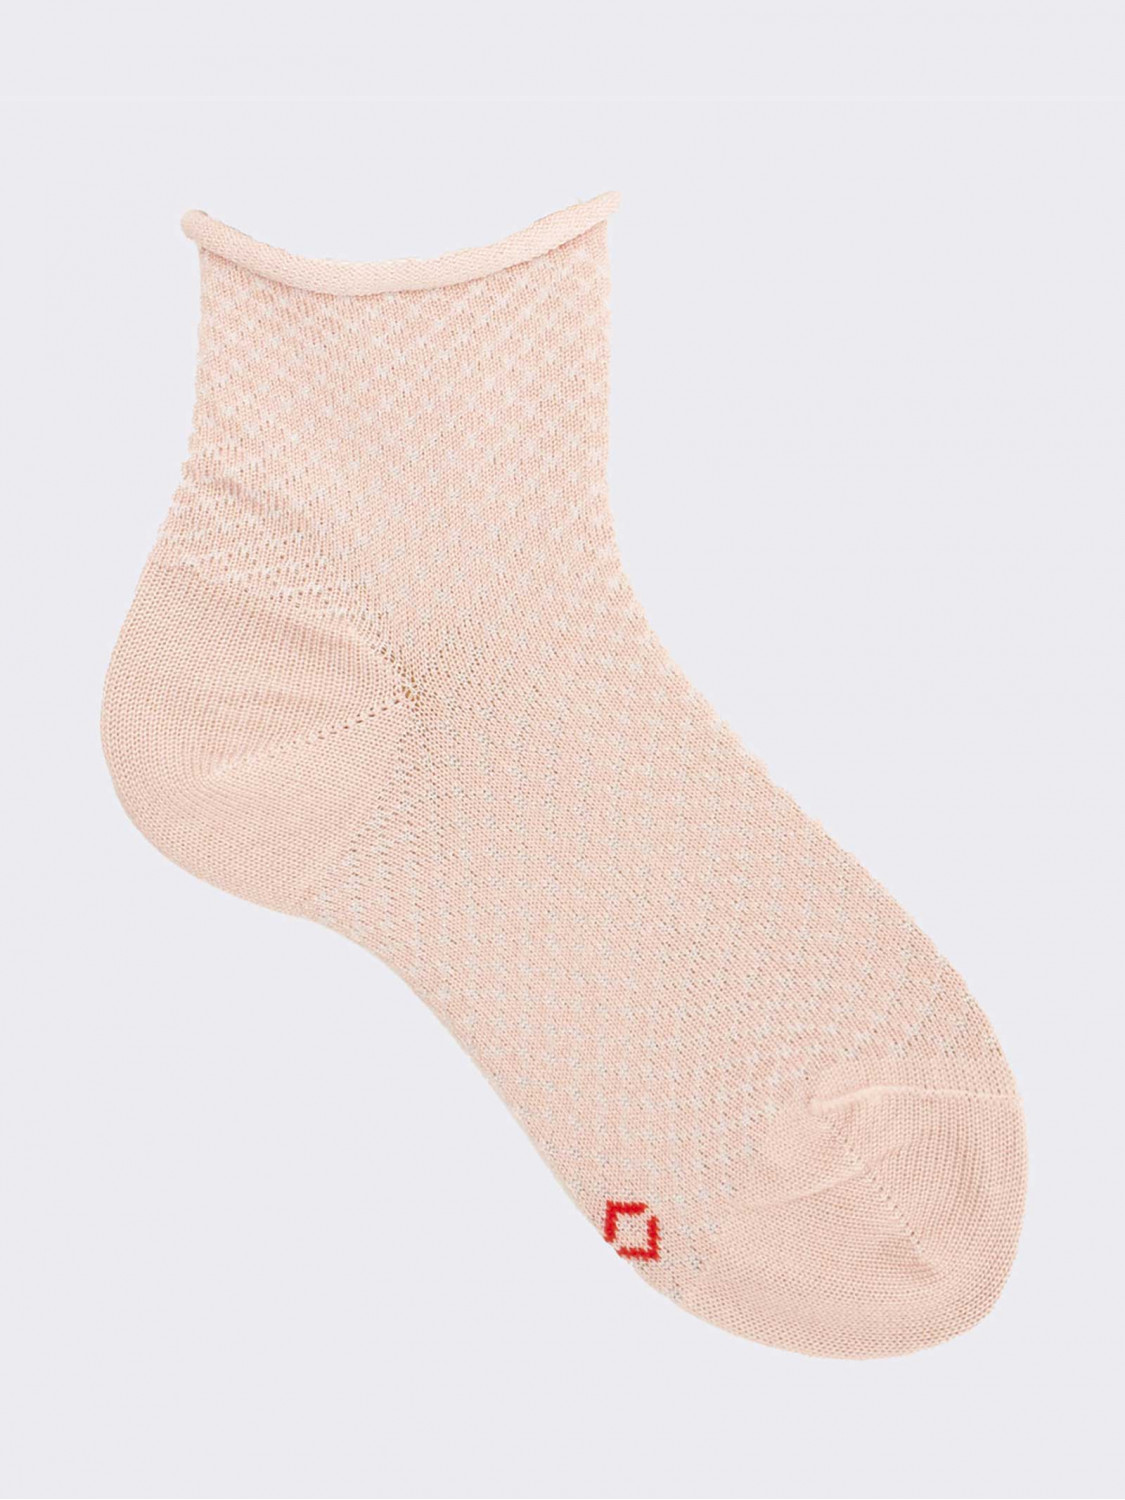 Net Pattern Girl's Short Socks in Cotton